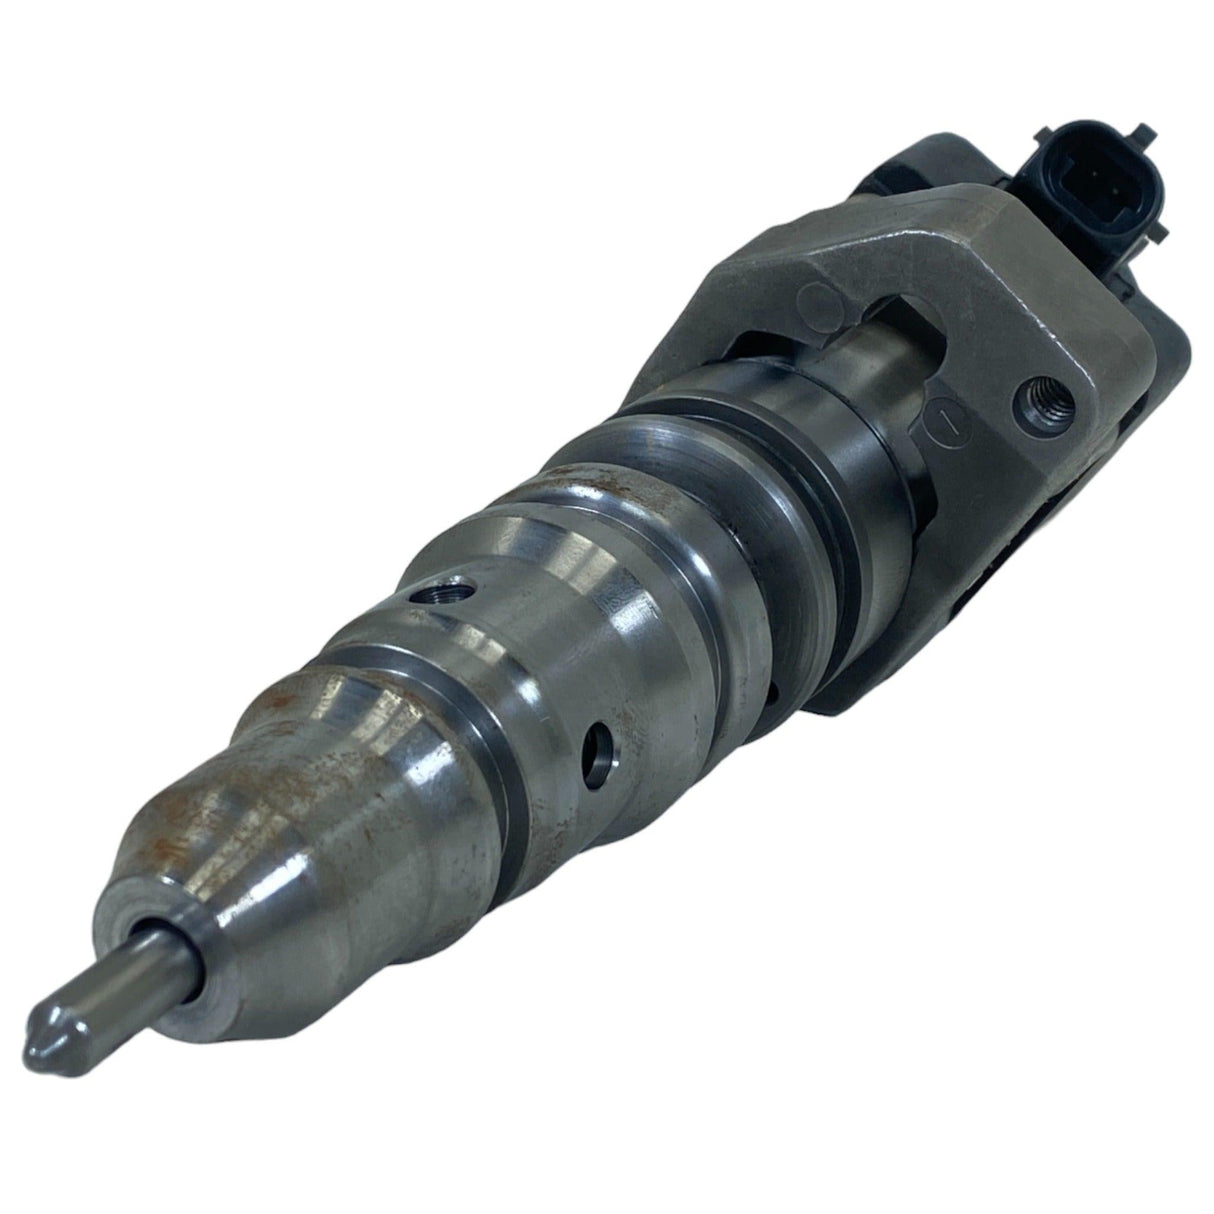 1830562c92 Genuine International Injector For Navistar